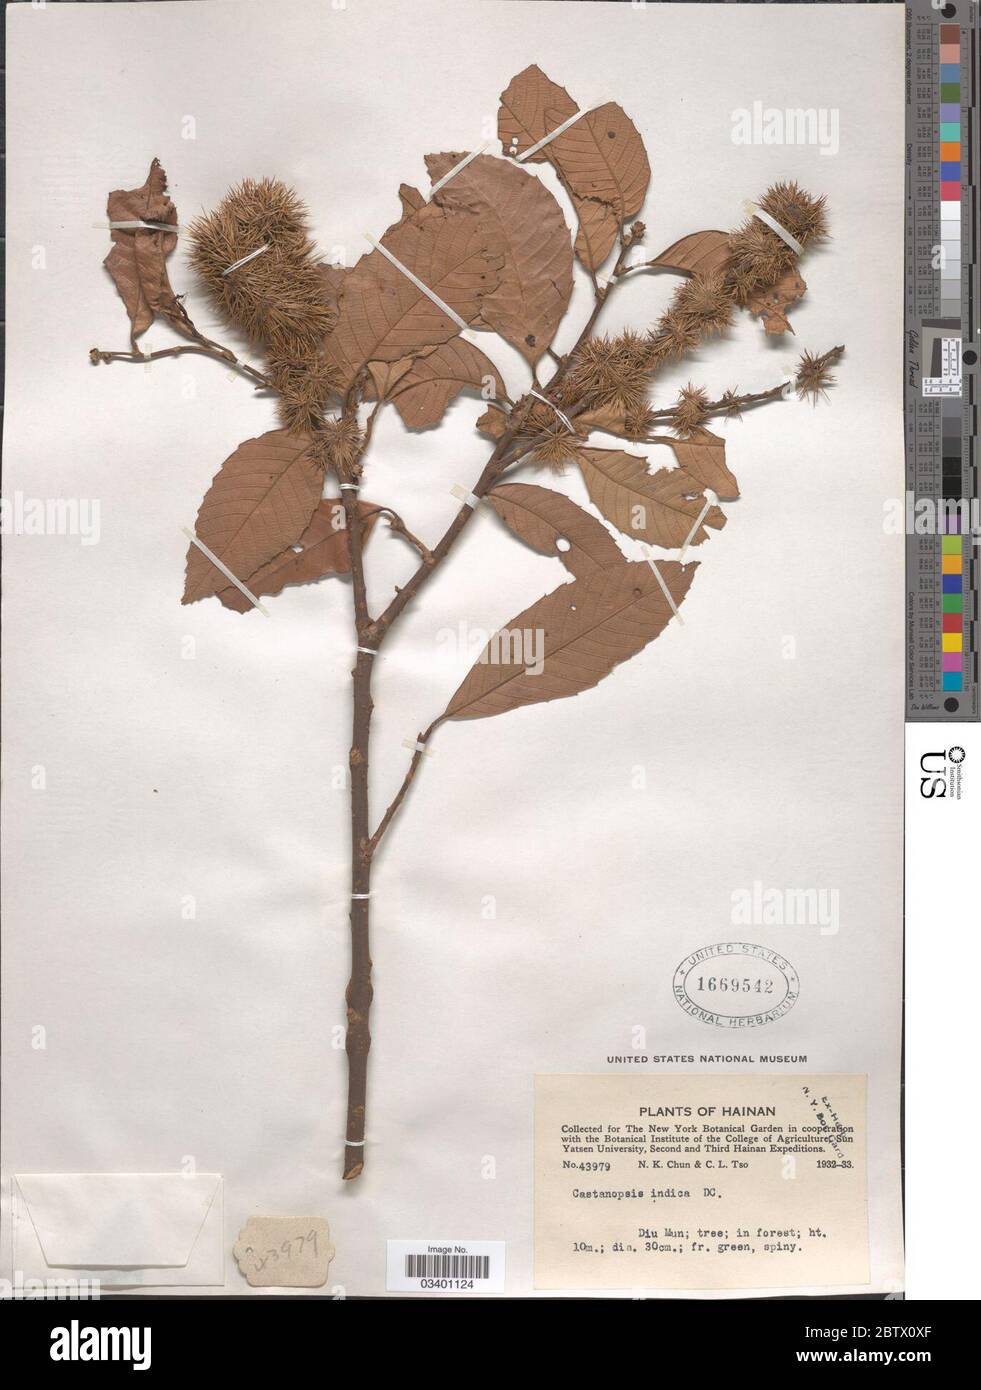 Castanopsis indica Roxb A DC. Stock Photo